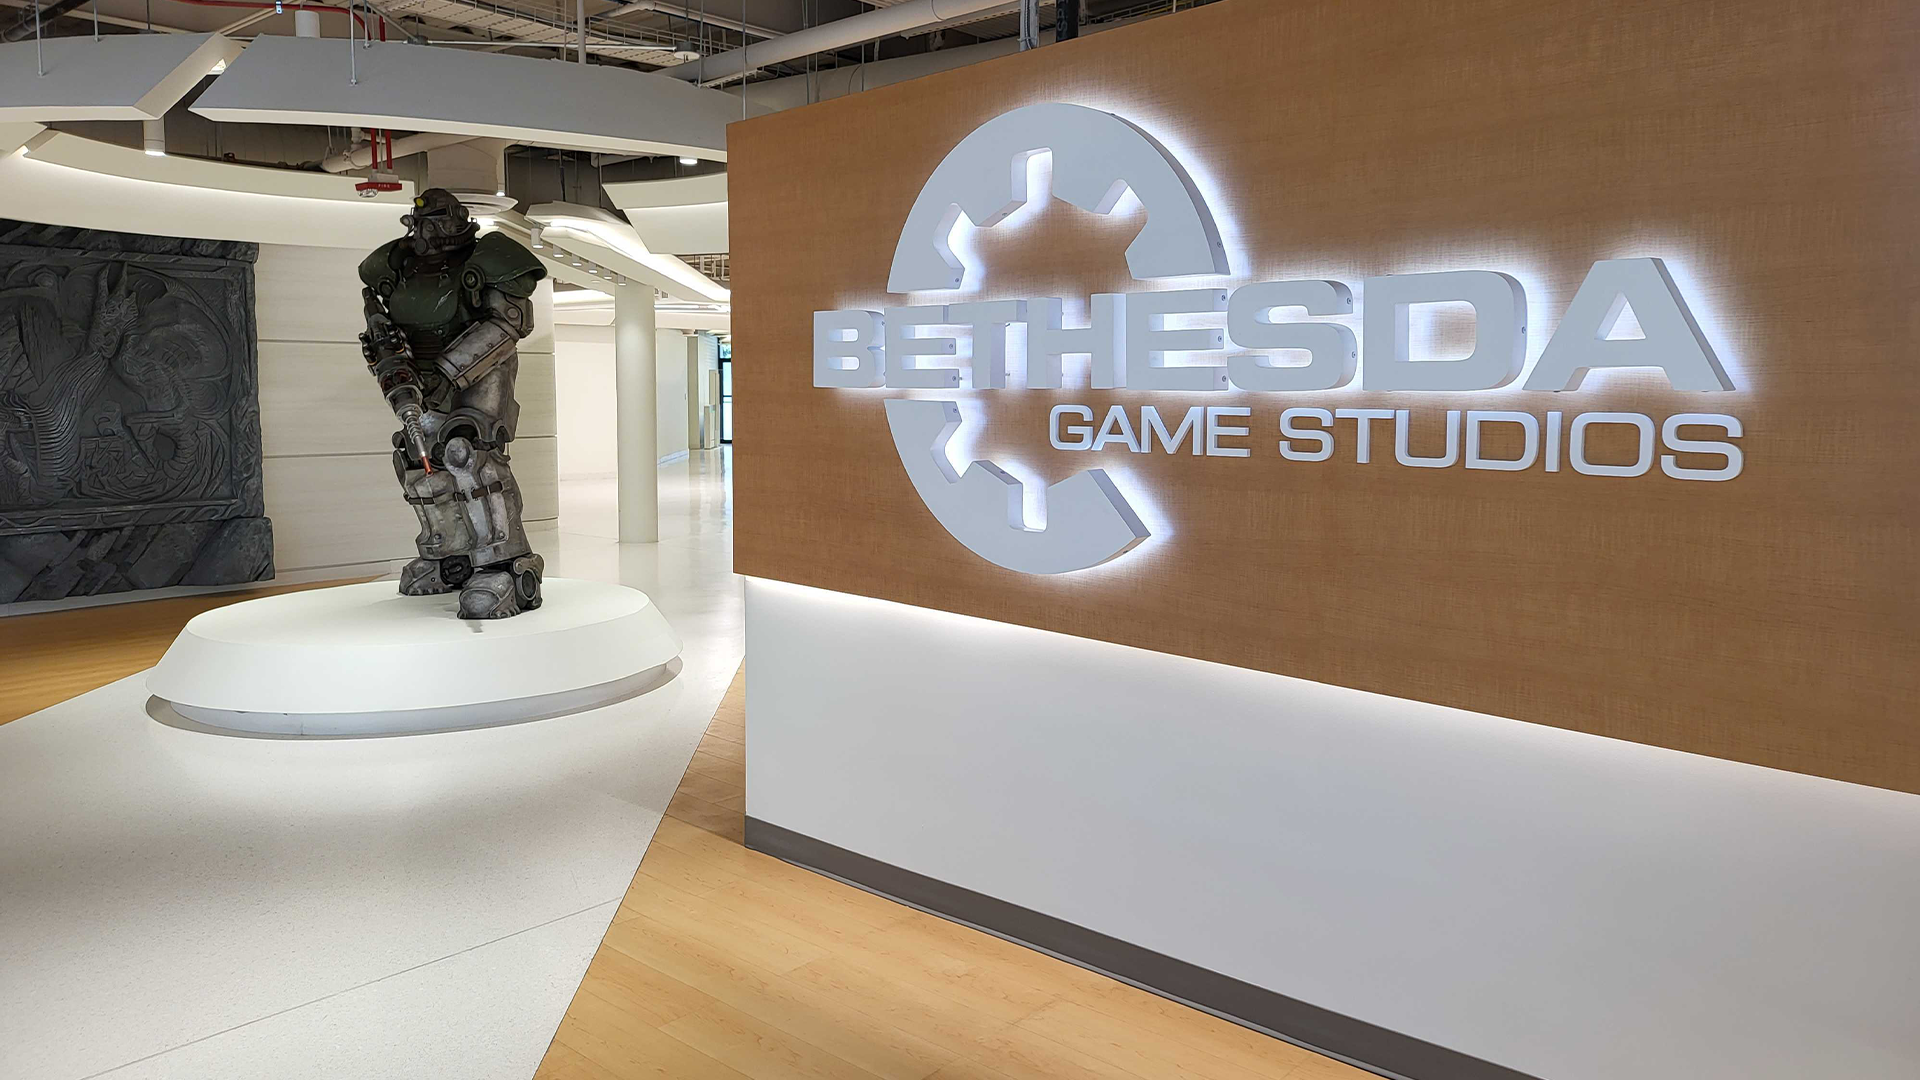 Games Games Studio